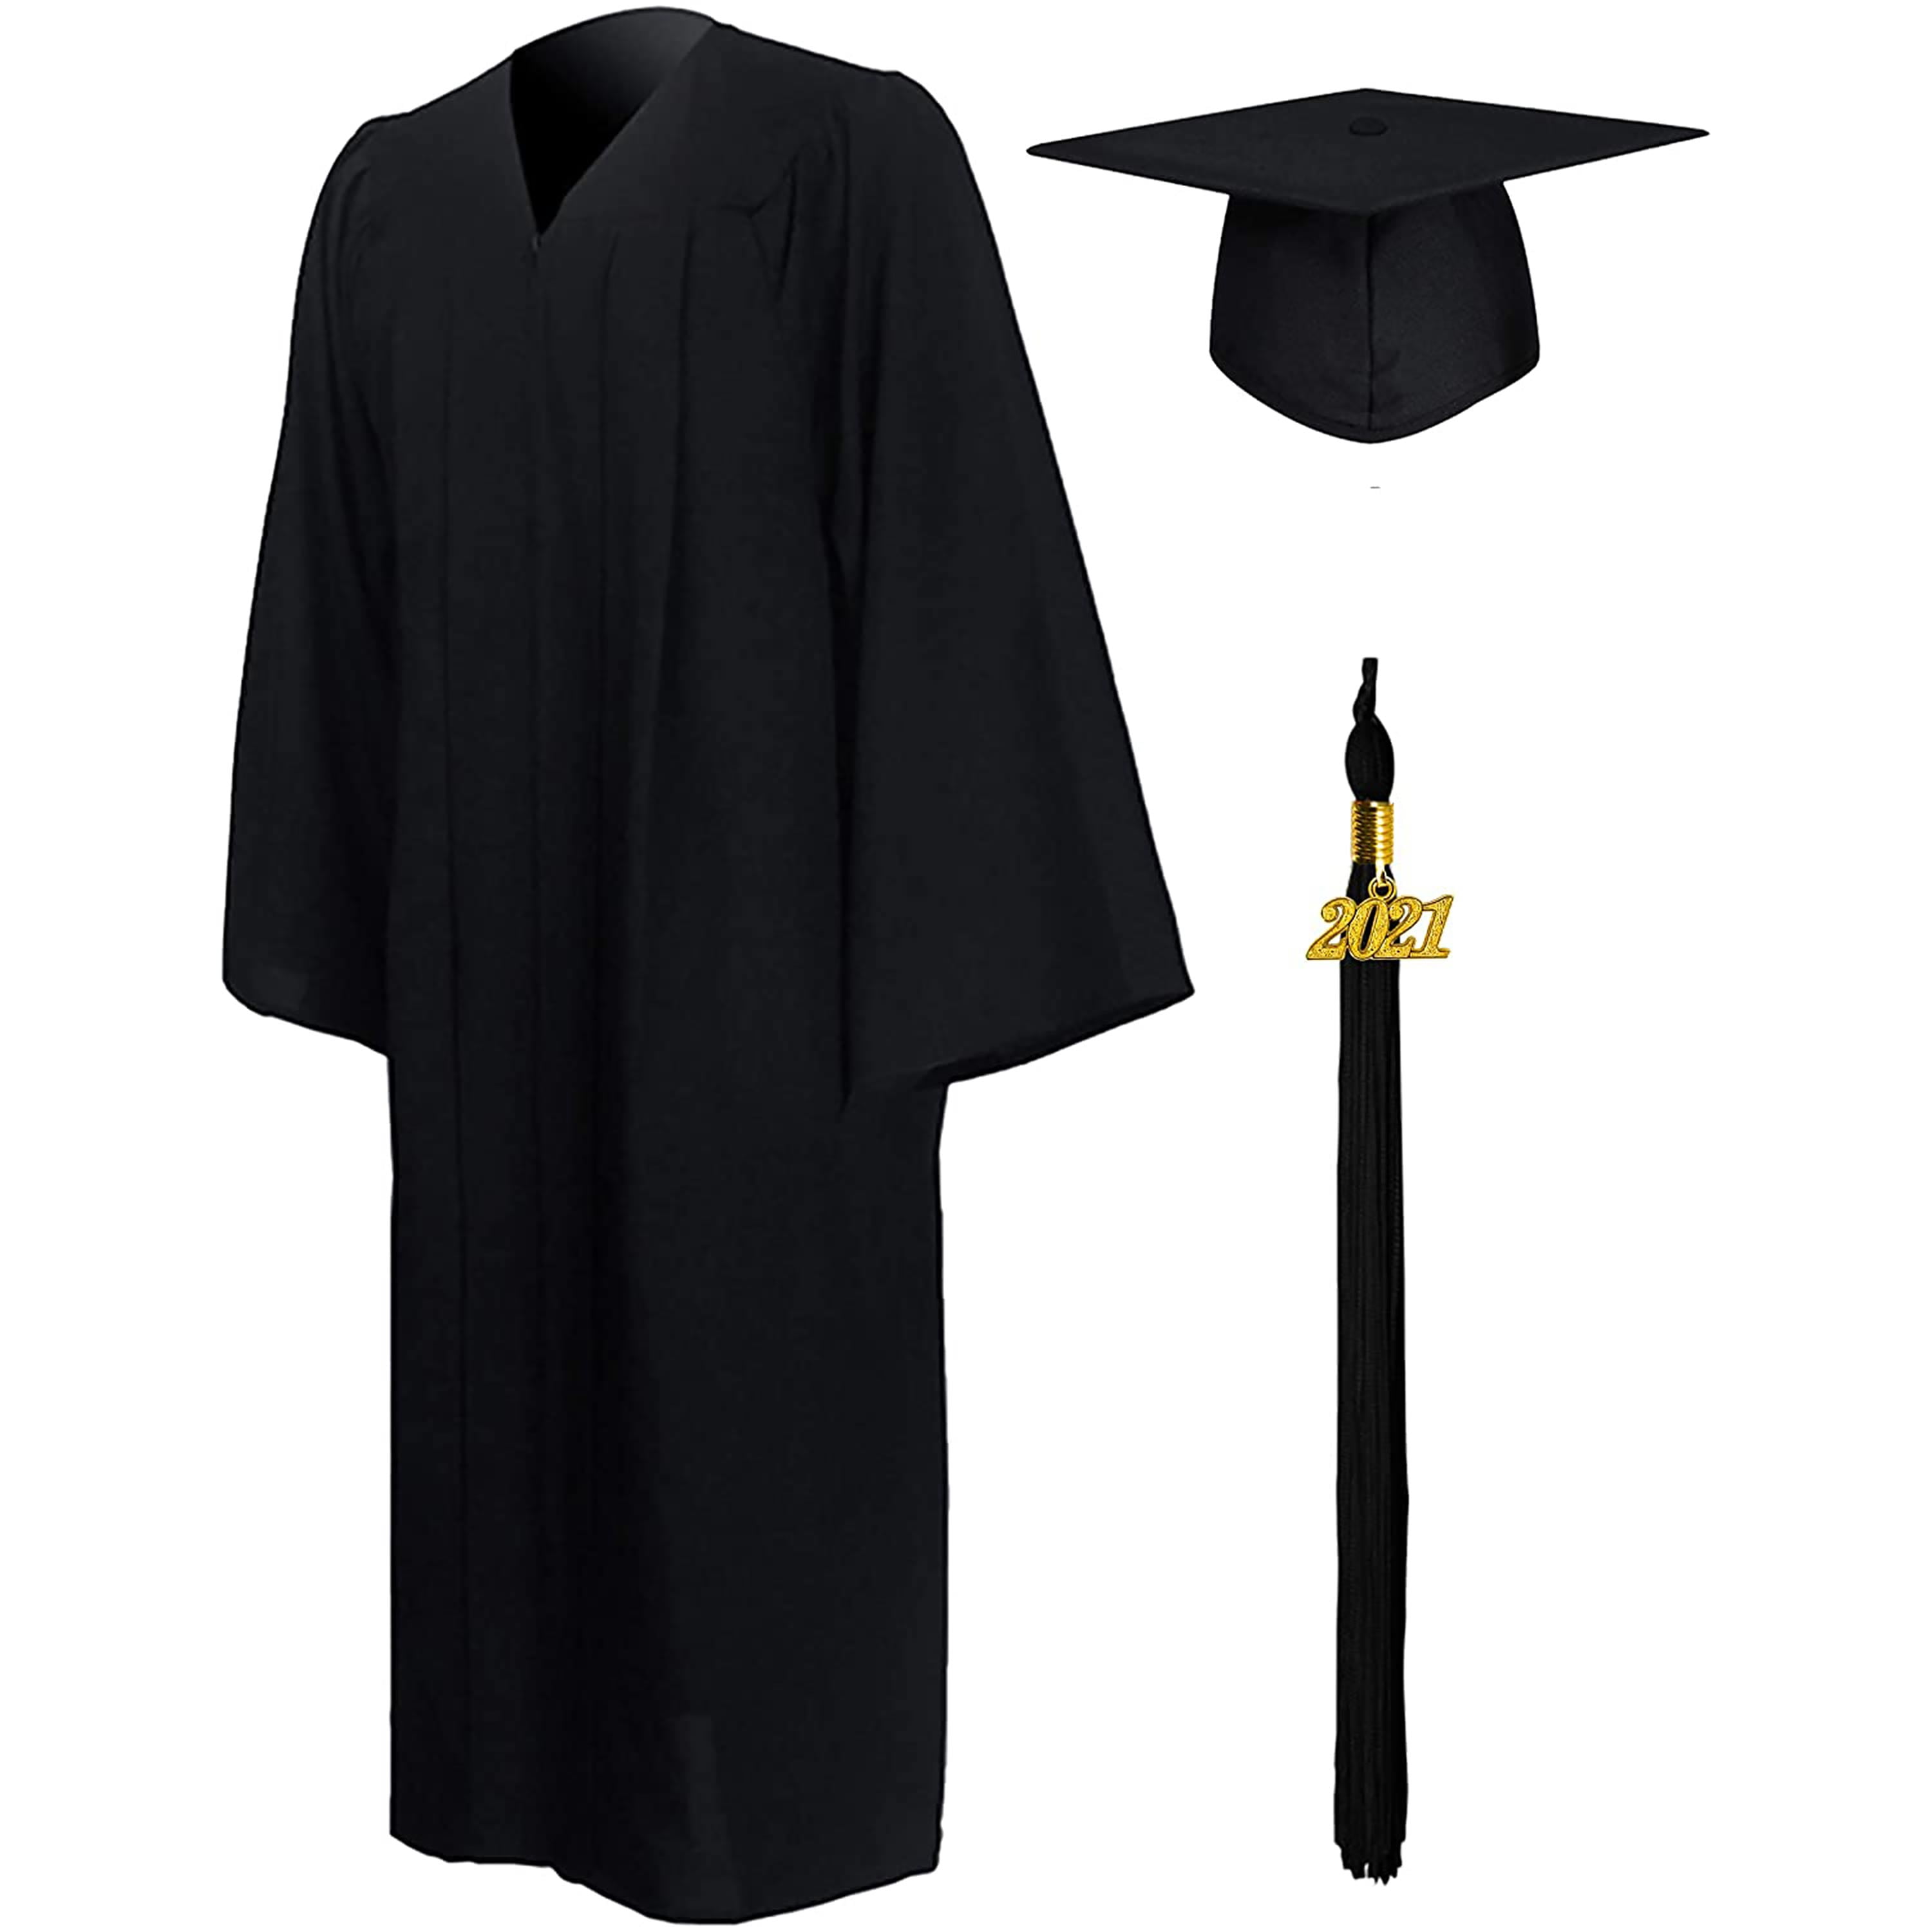 Matte Adult Graduation Gown Cap Tassel Set for for Adults Gift for Student Teacher Bachelor/High School Ceremony Black